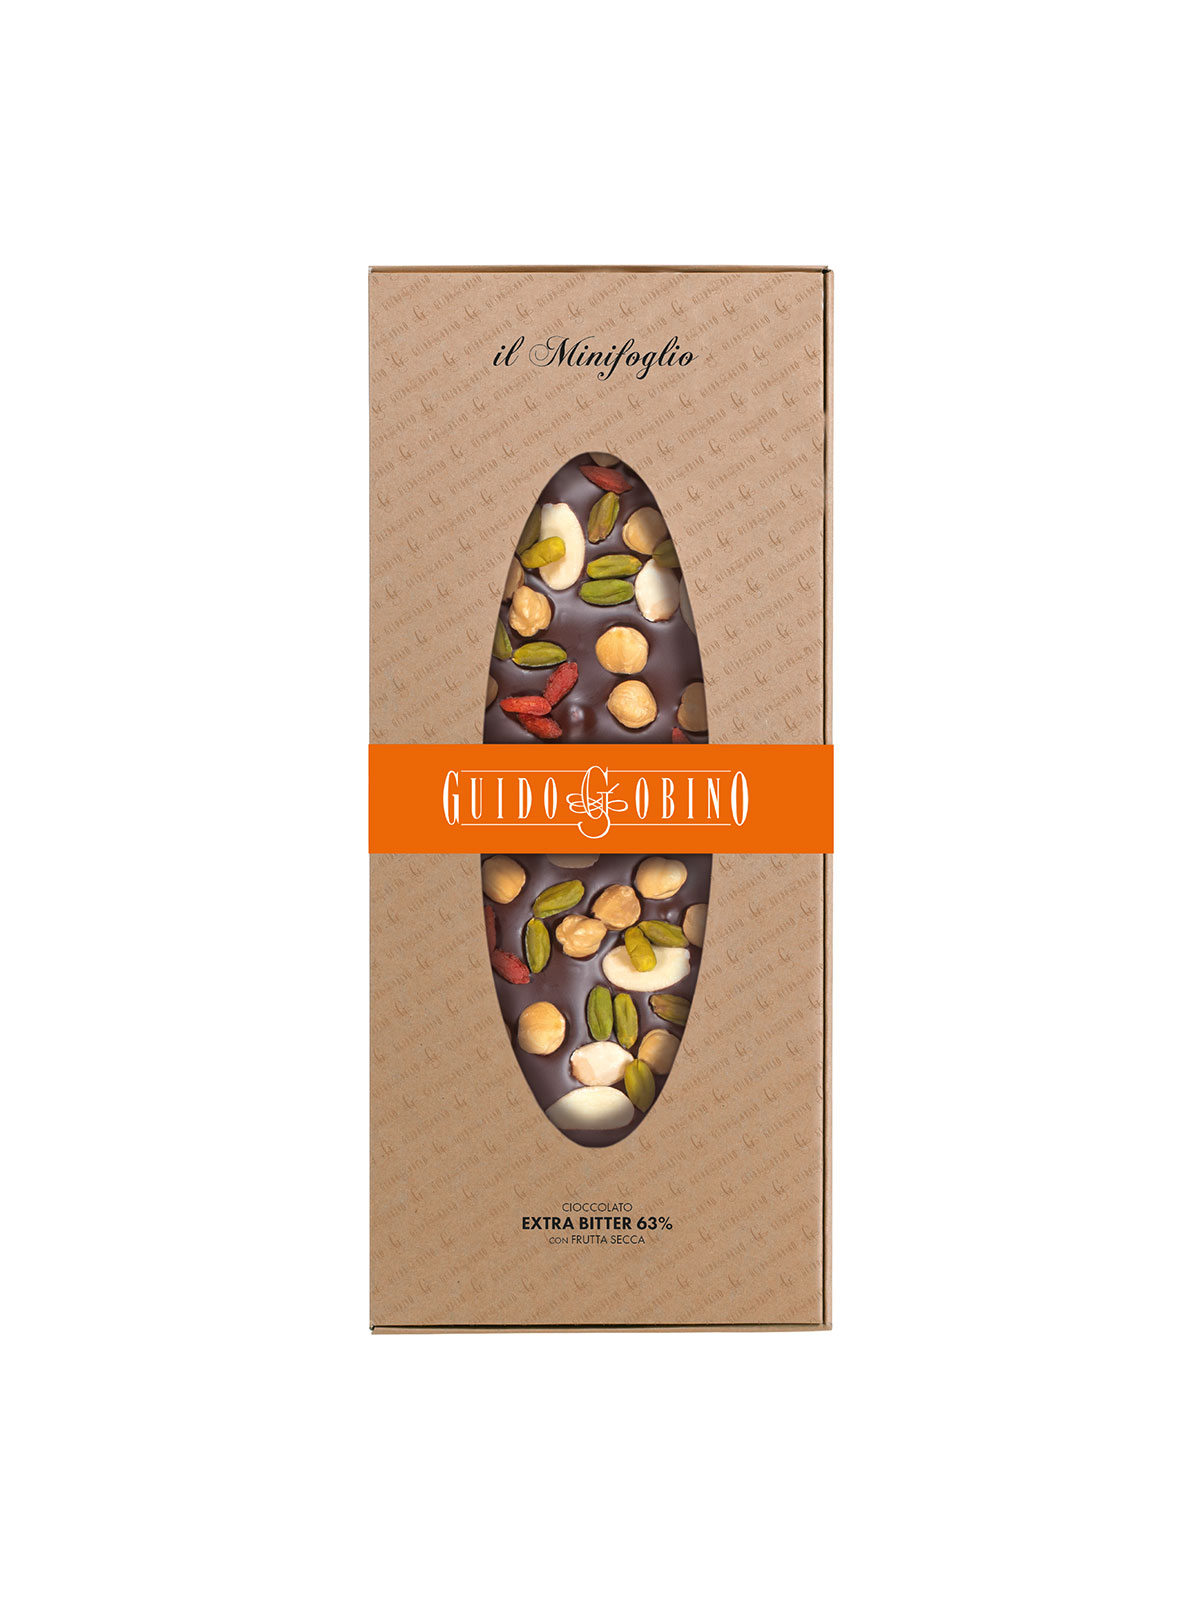 Guido Gobino Mini Foglio Dark Chocolate Bar with Nuts - Sweets, Treats, & Snacks - Buon'Italia